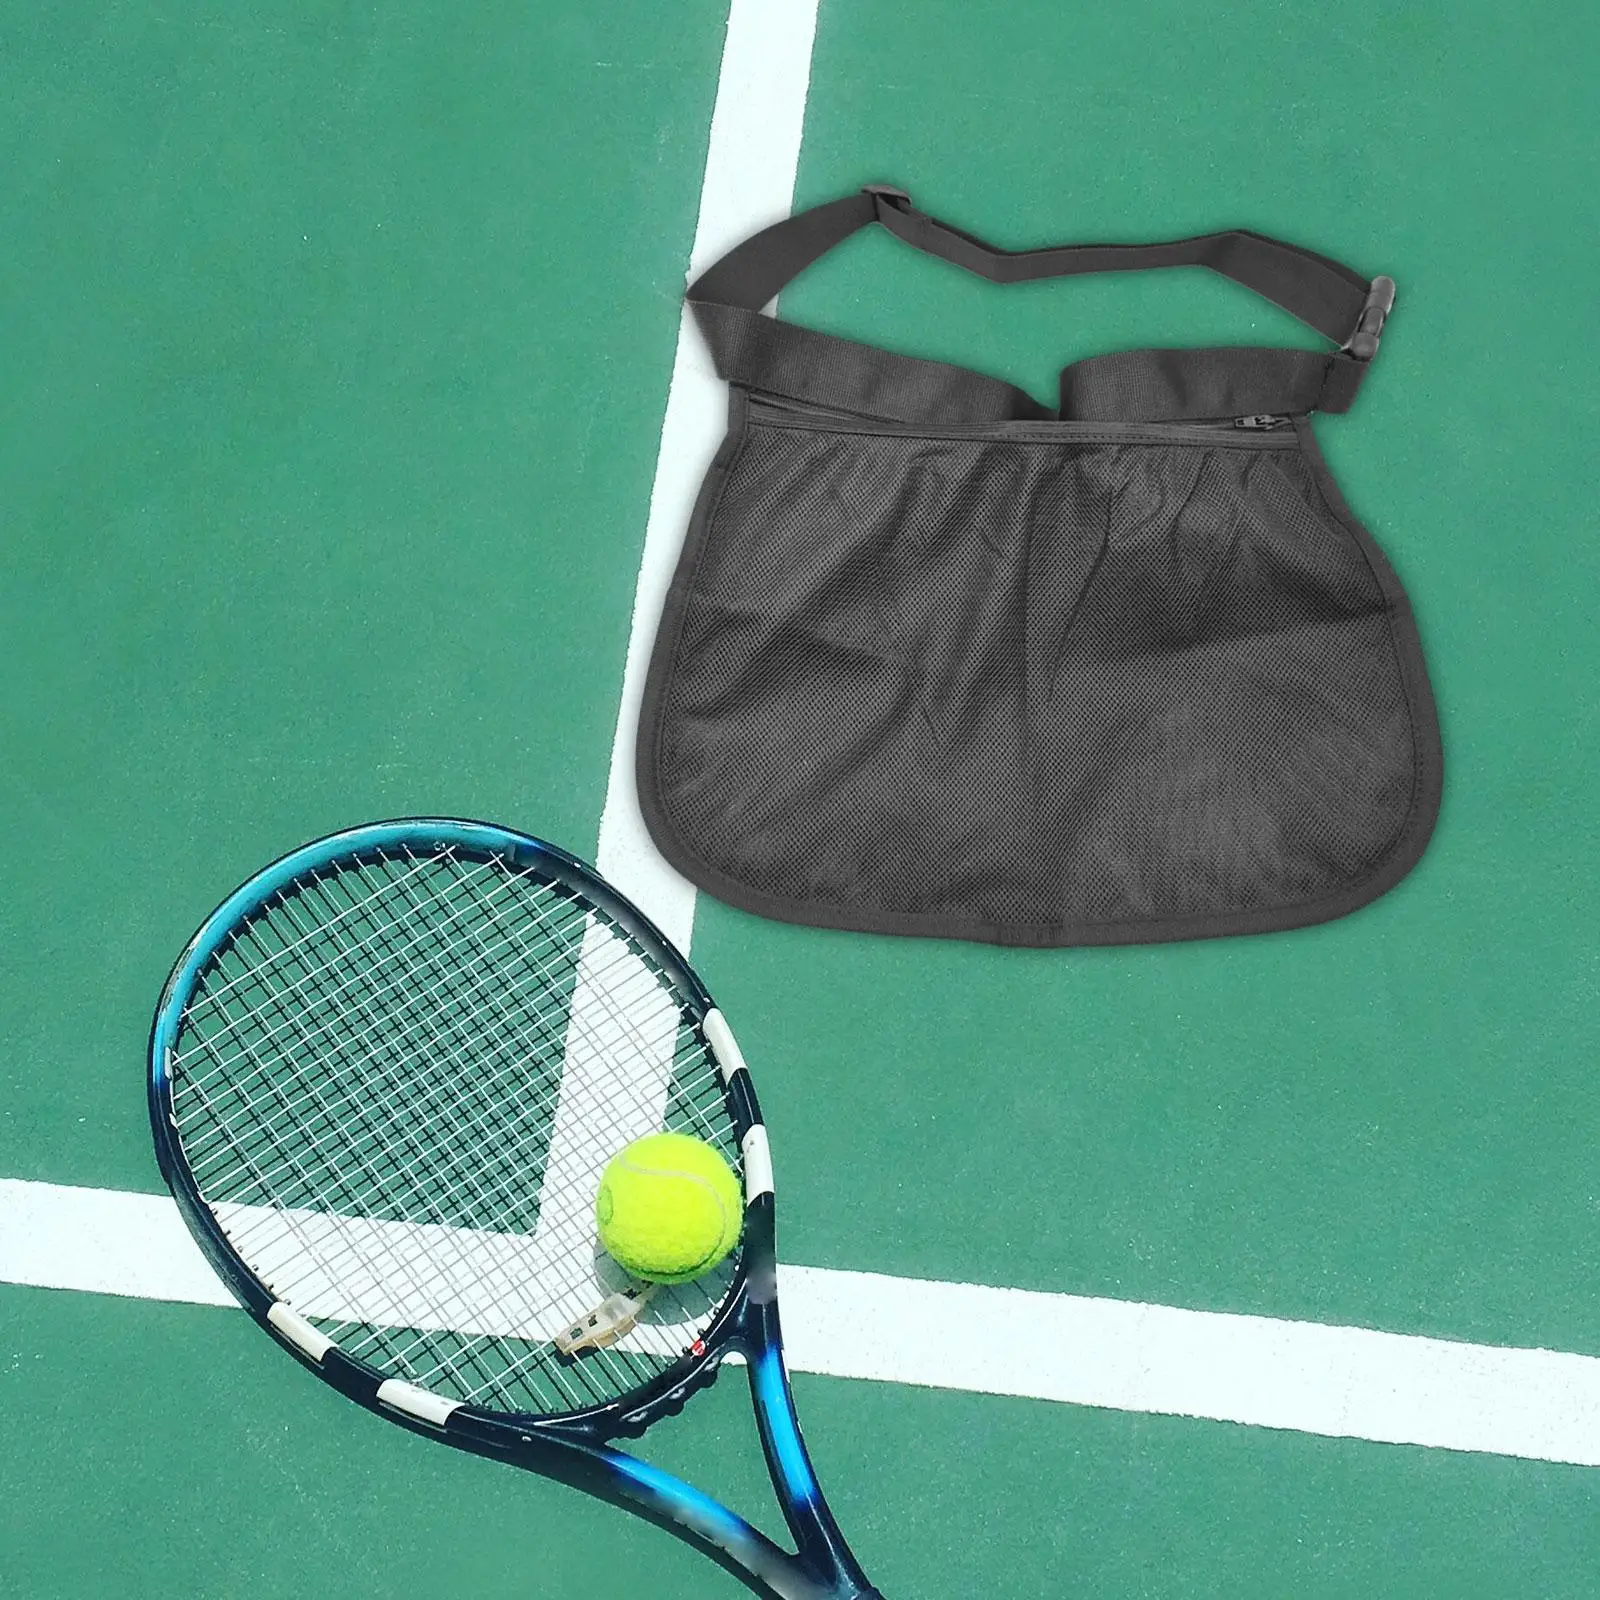 Tennis Ball Holder Holding 8 Tennis Balls Waist Pouch Bag Golf Balls Fanny Pack for Women Fitness Men Storing Balls and Phones